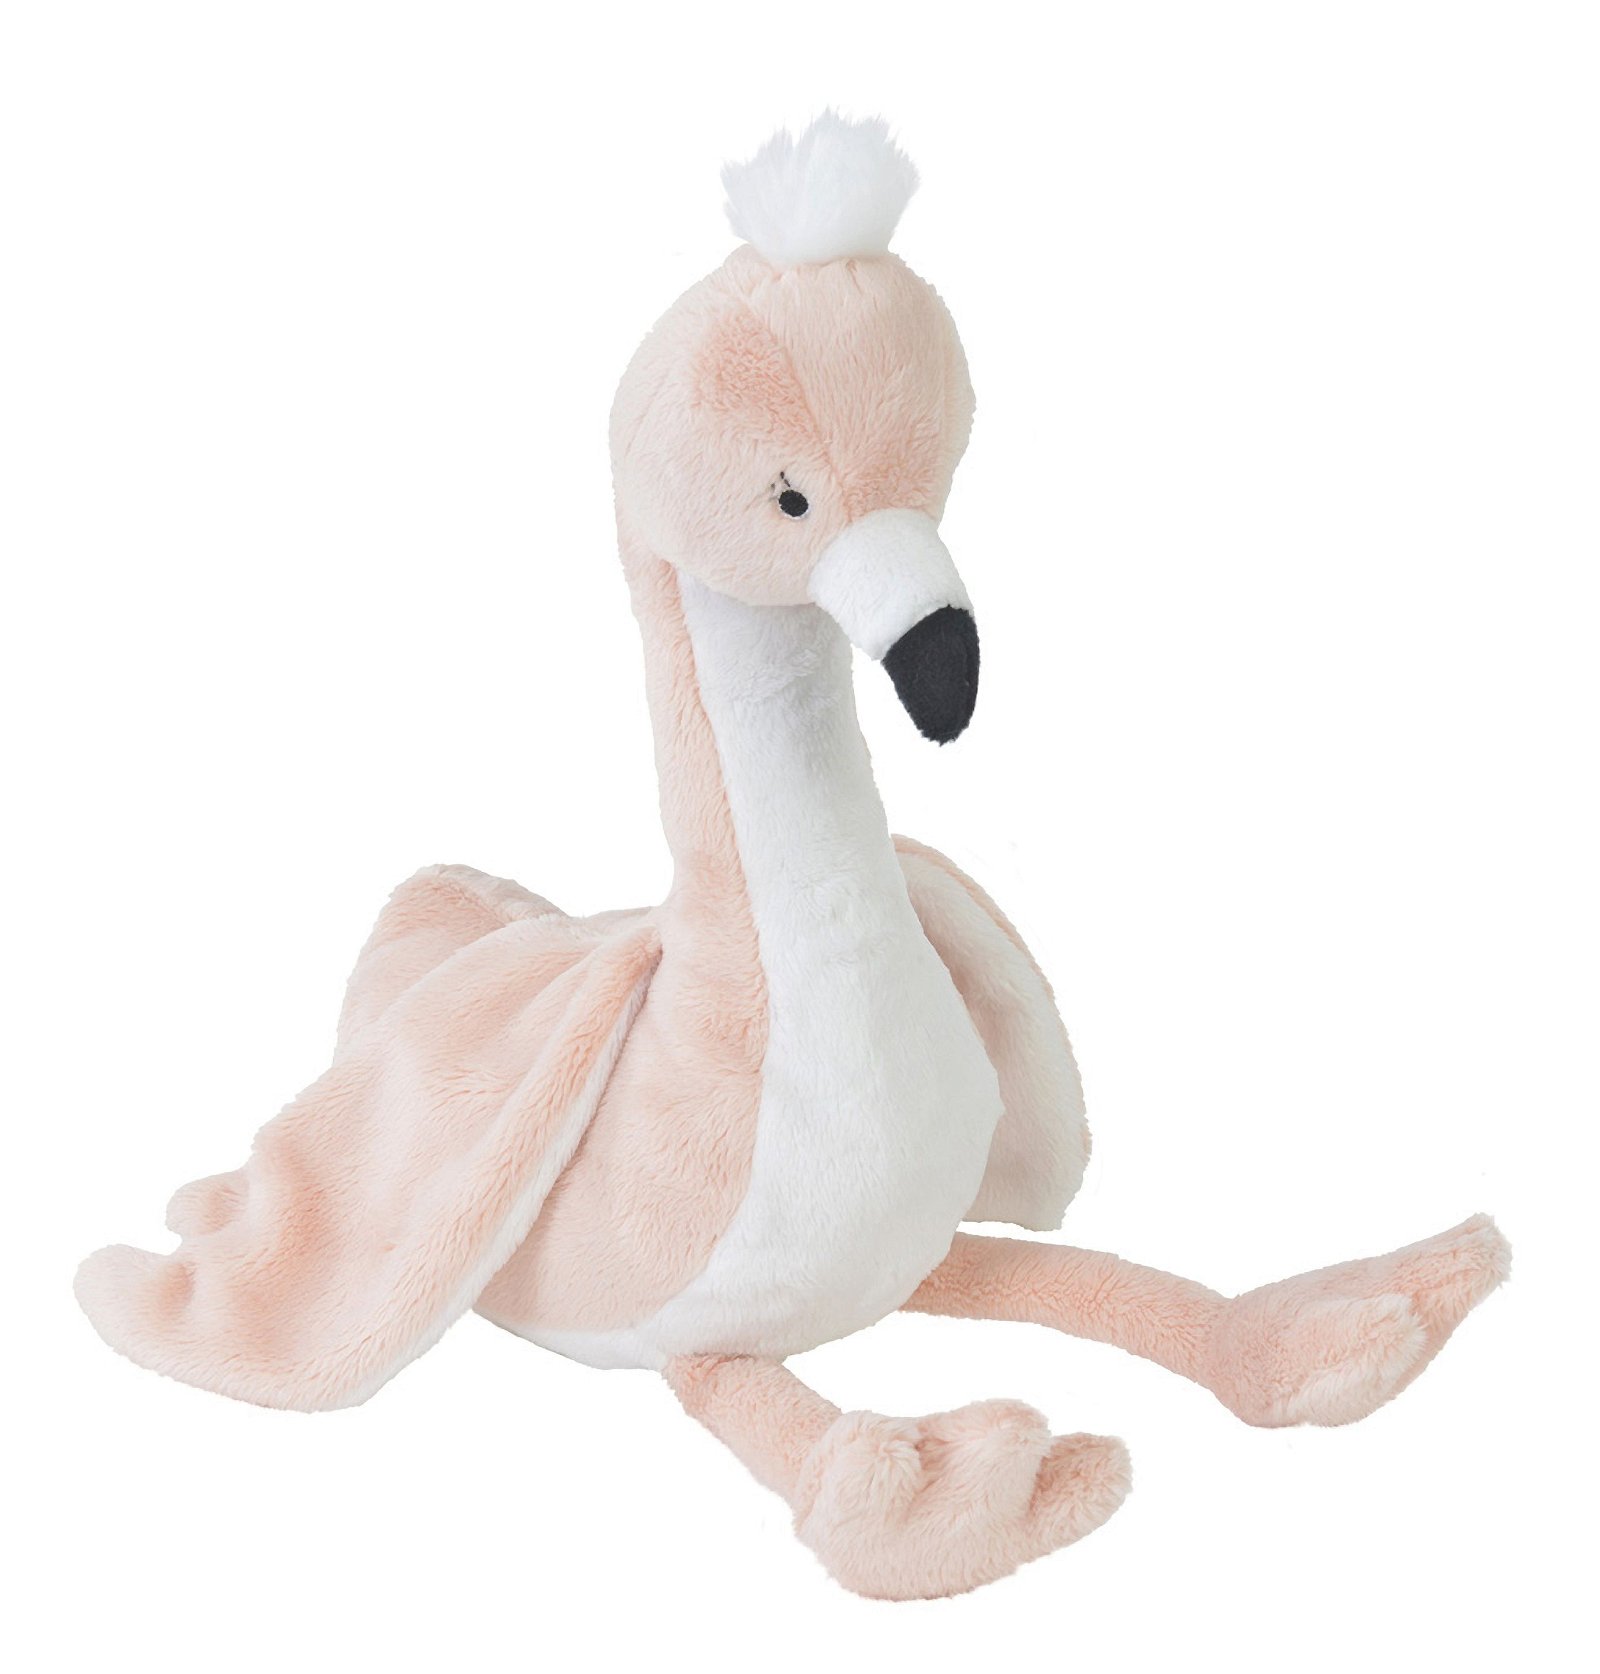 Knuffel Flamingo Fay - kleine knuffel euro 12,99 / grote knuffel euro 15,99